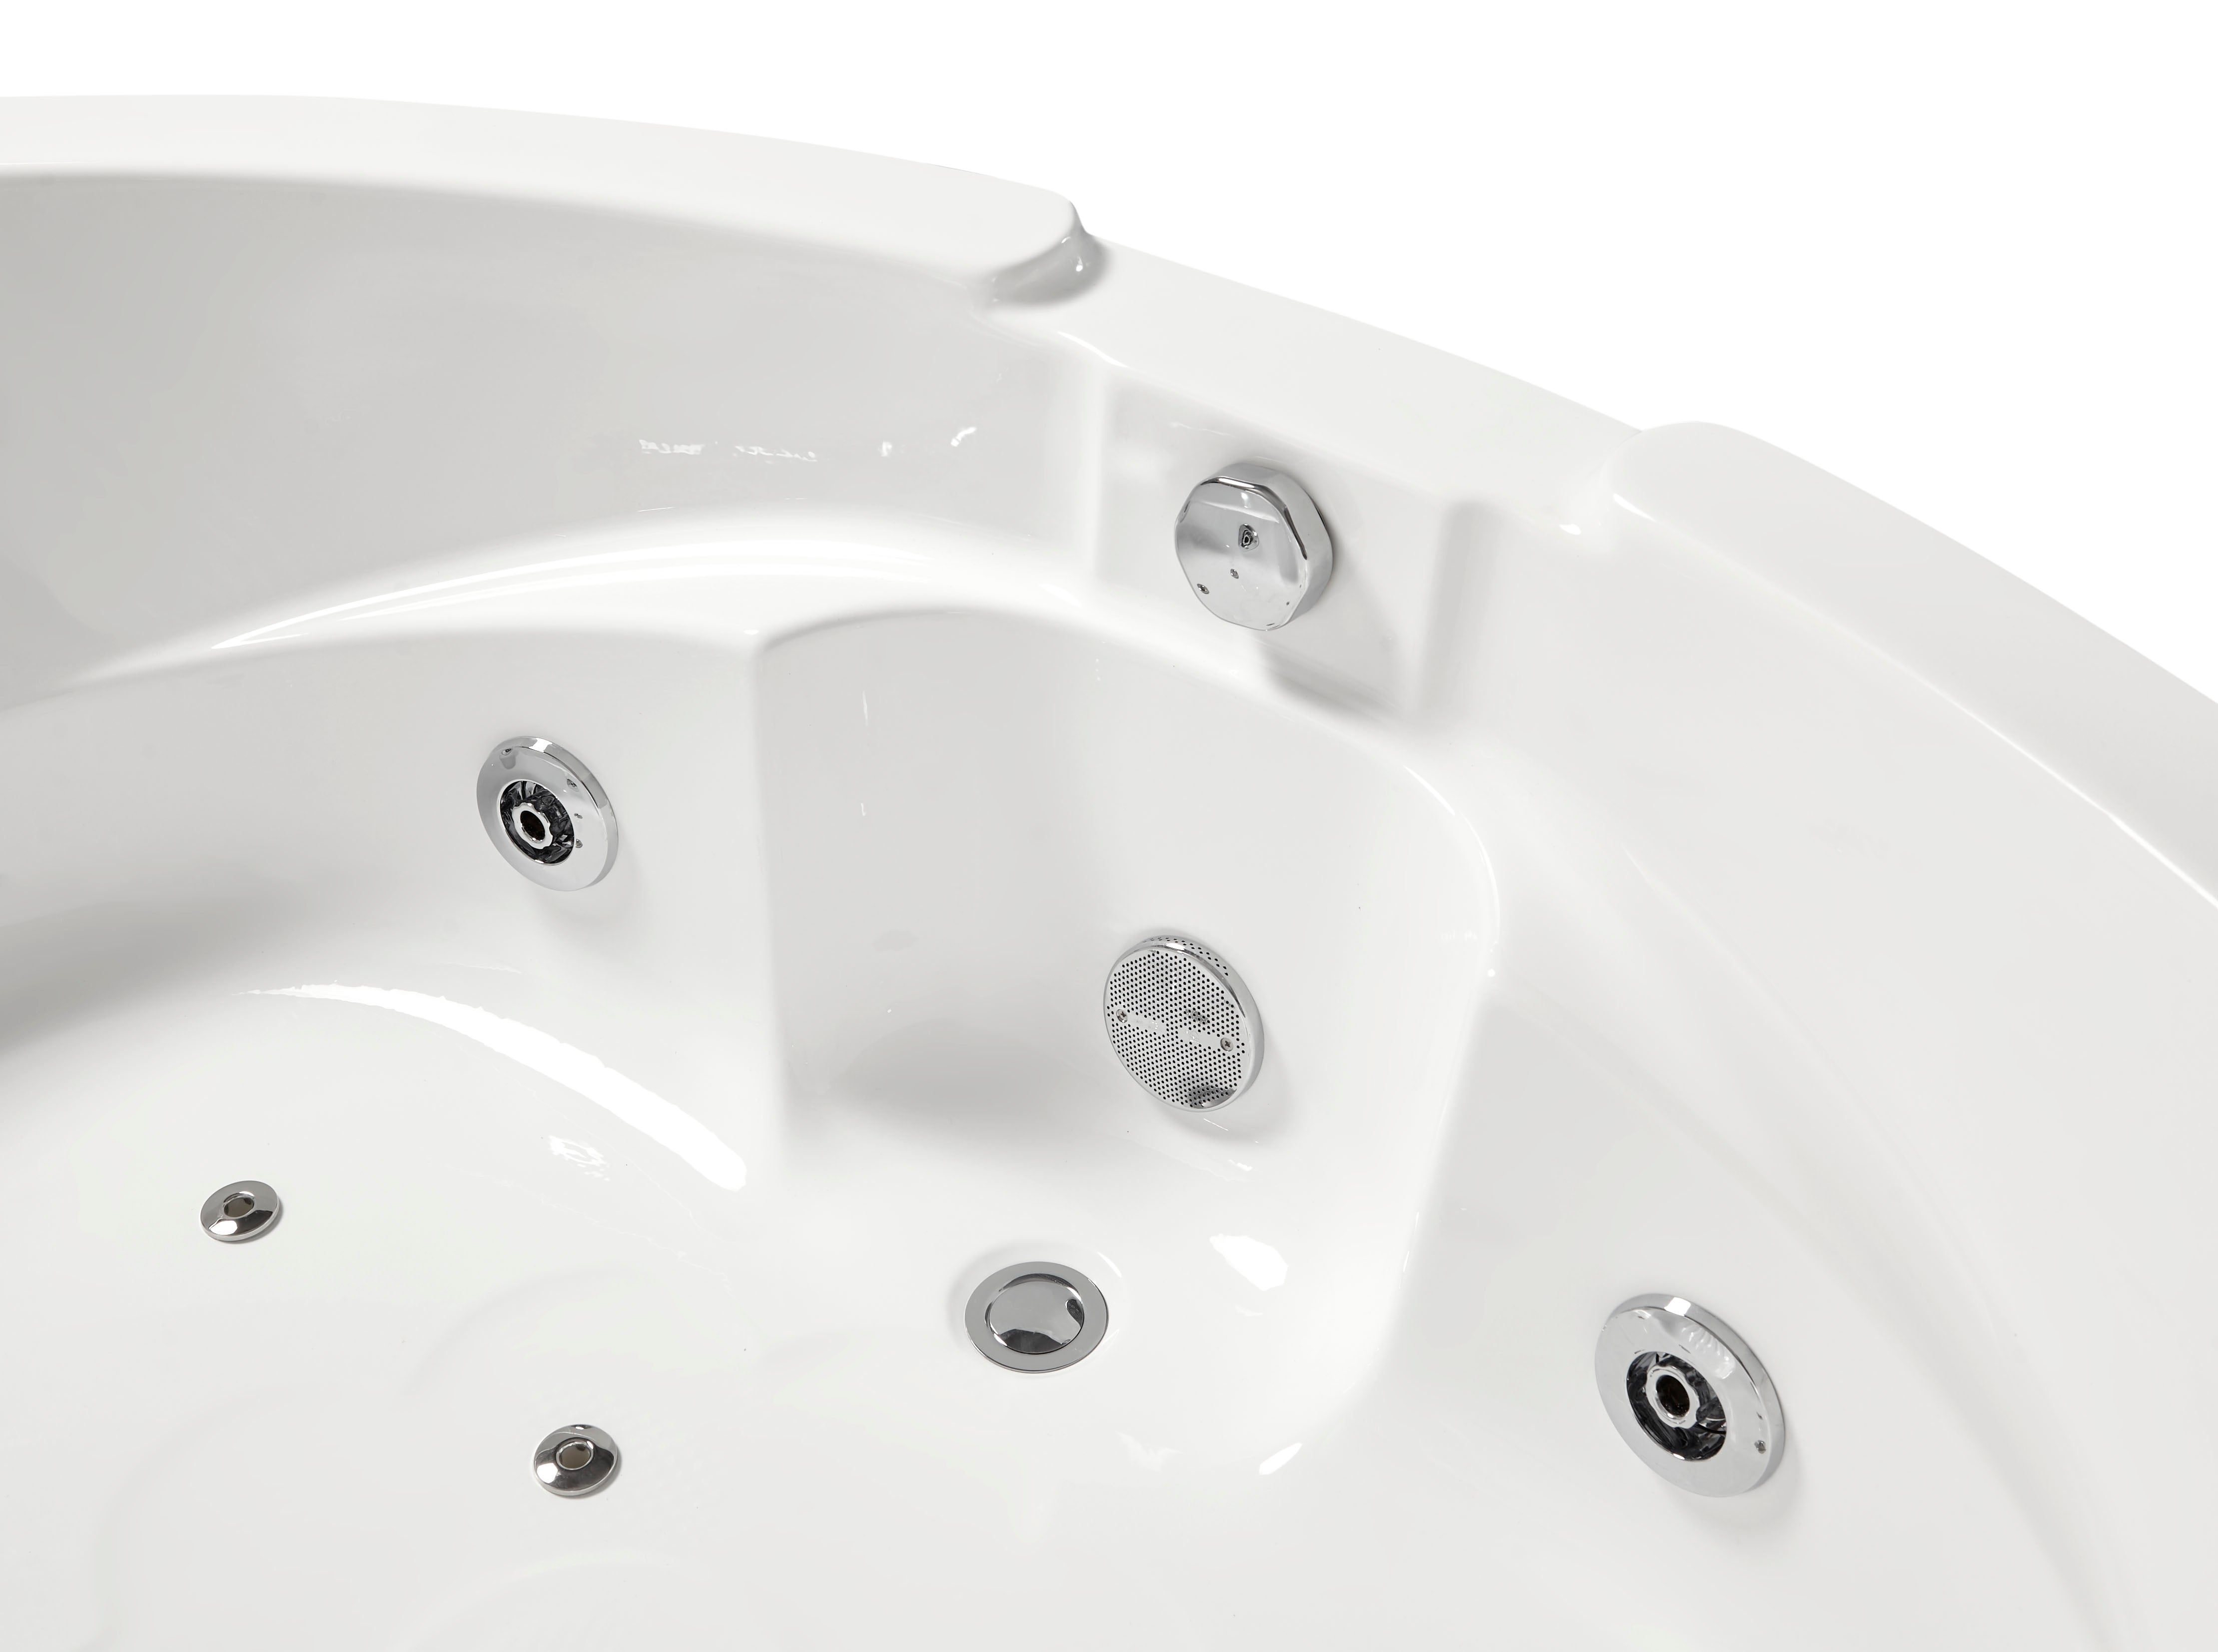 EAGO AM505ETL Waterfall Corner Whirlpool Bathtub Acrylic White for Two (5-foot)